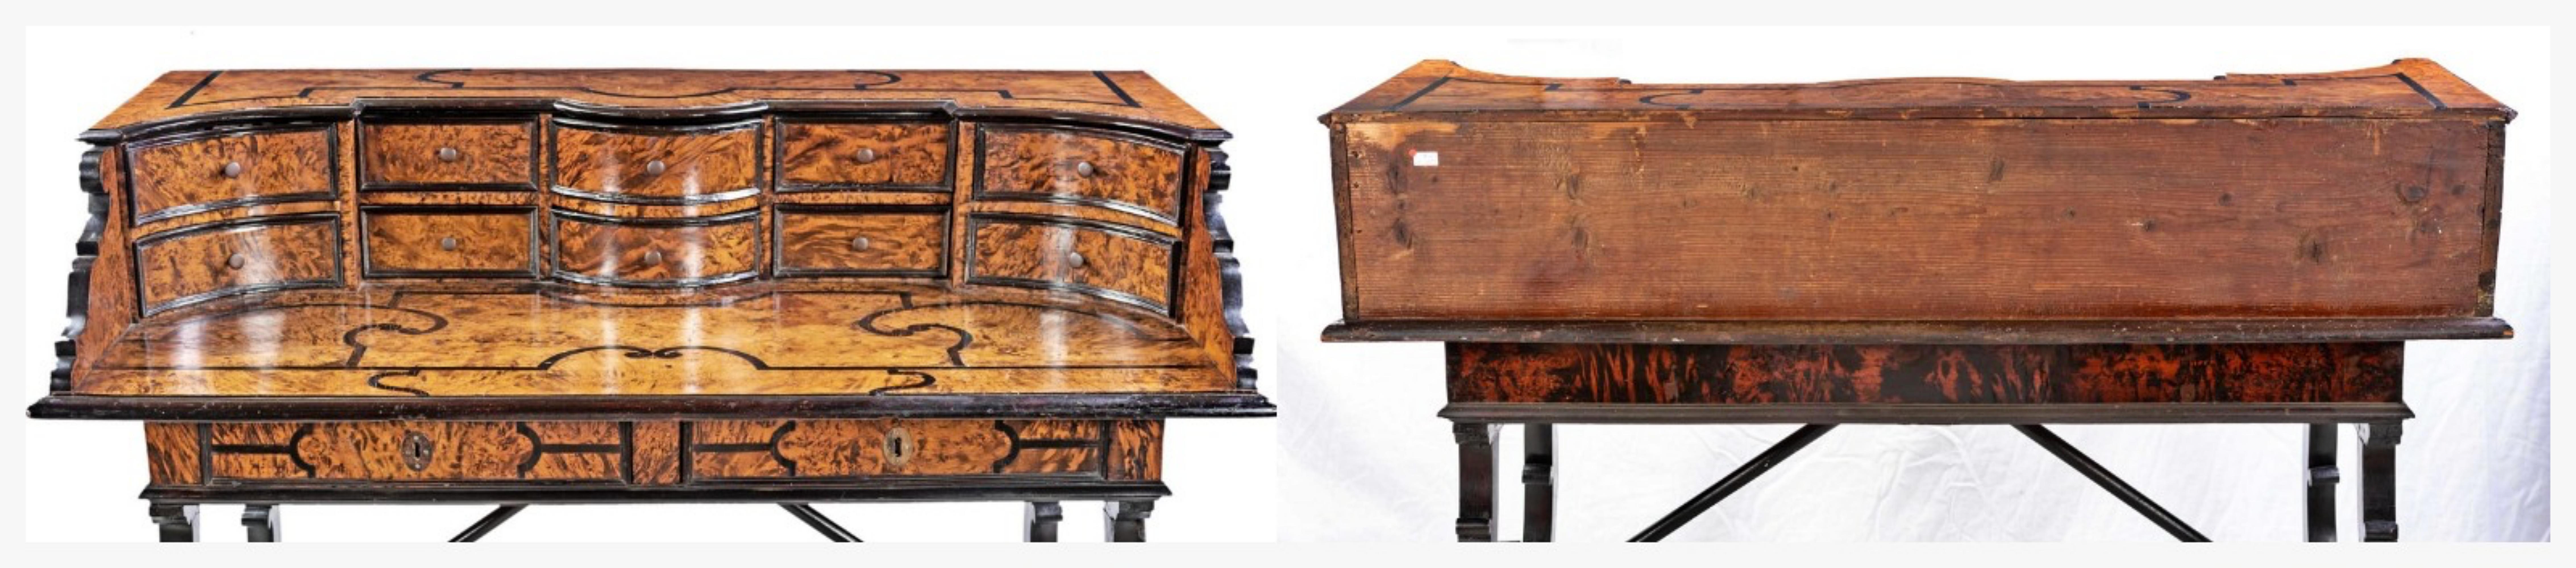 Hand-Crafted Italian Desk Veneered in Walnut Briar, Lombardy, 17th Century